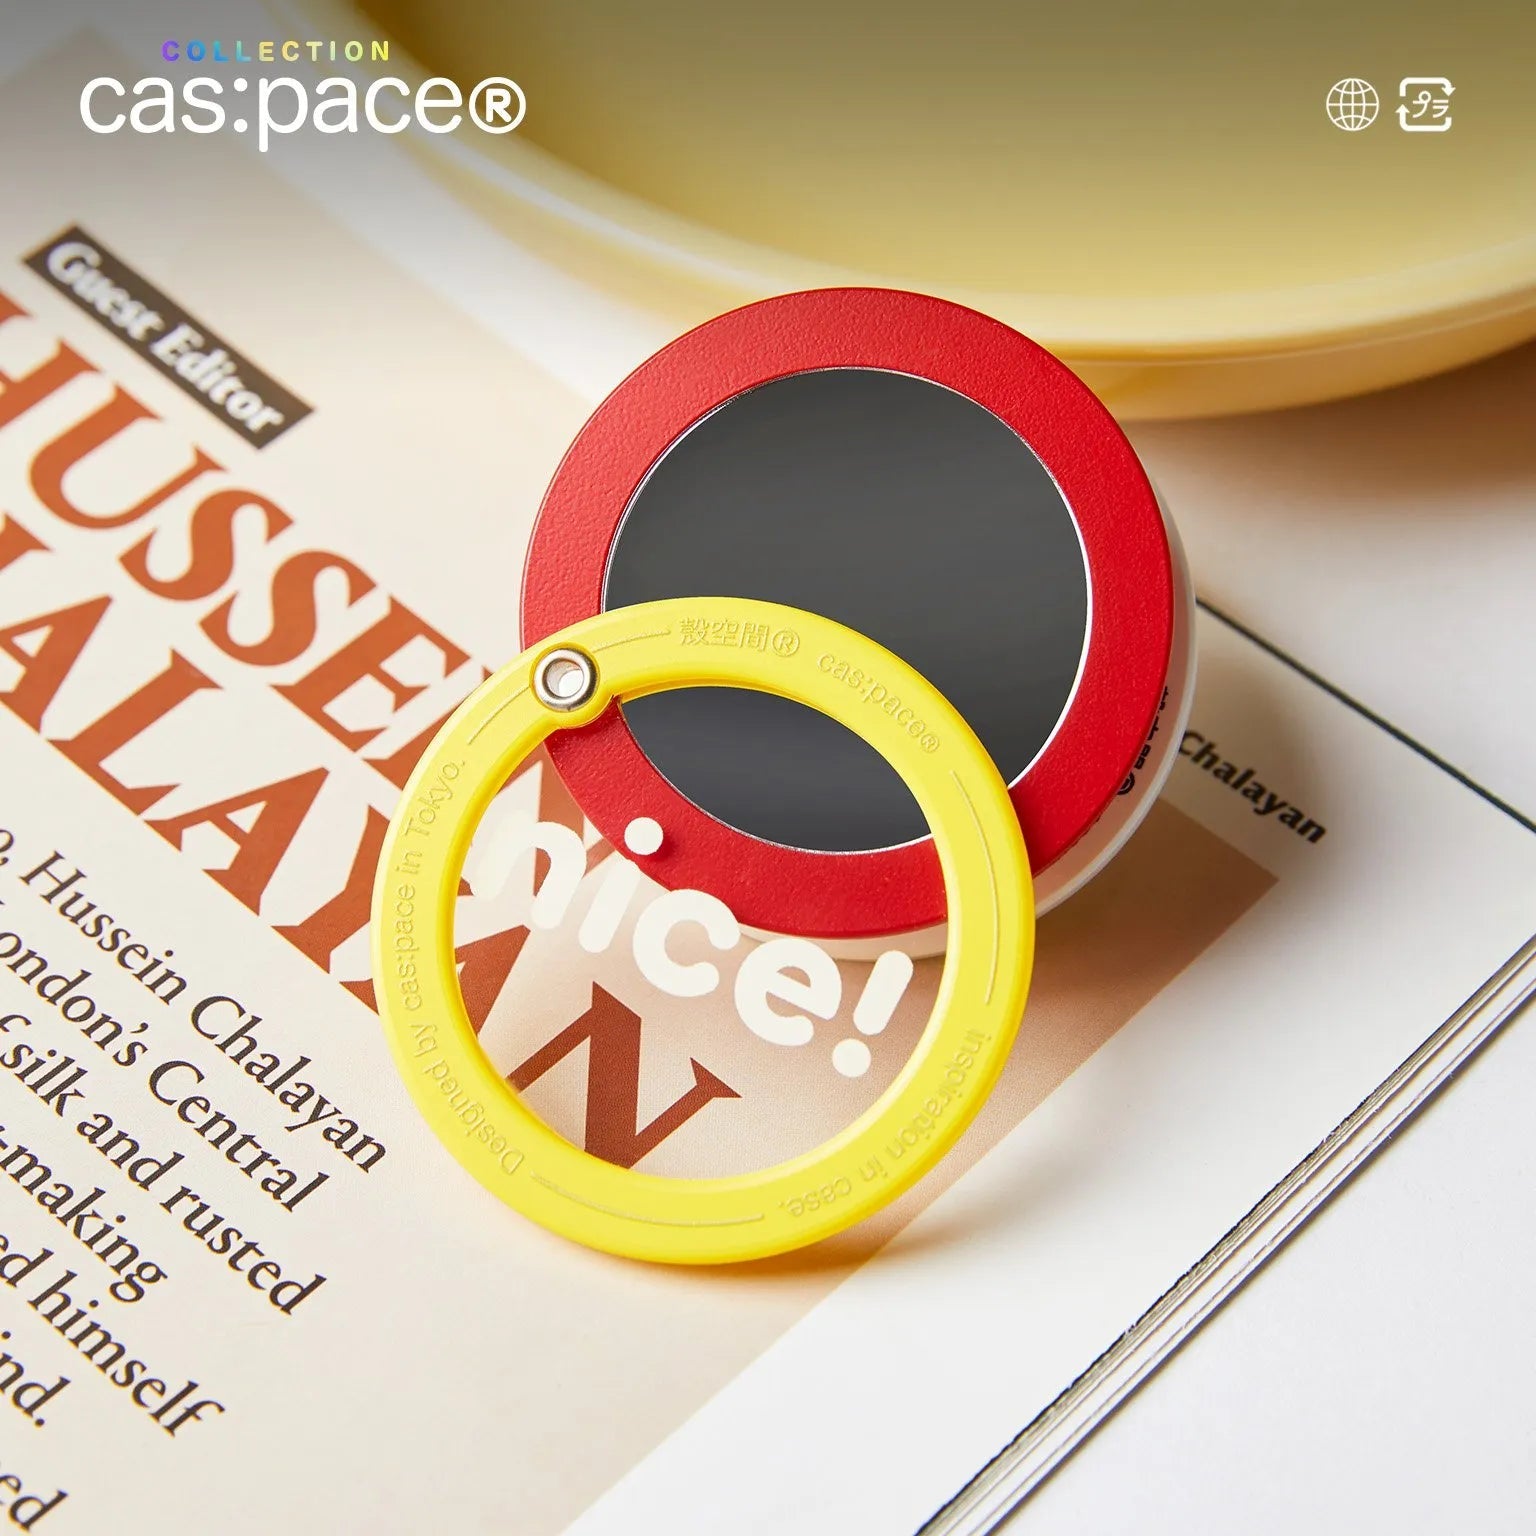 cas:pace collection Magsafe対応「cas」携帯ケース - cas:pace 殼空間